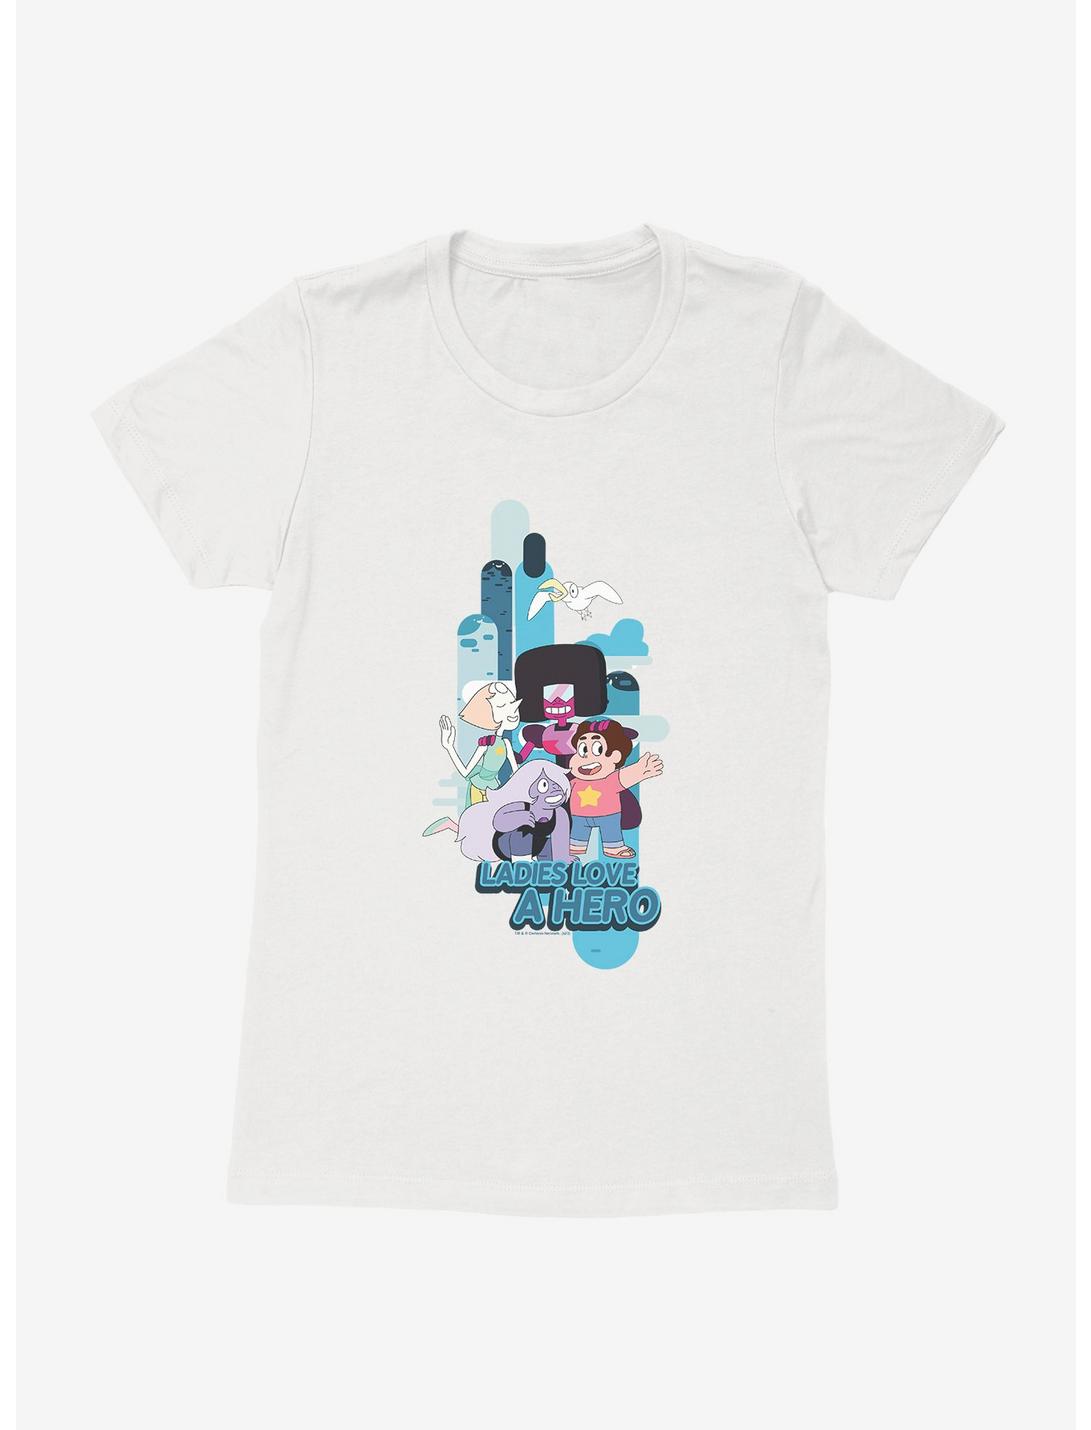 Steven Universe Ladies Love A Hero Womens T-Shirt, , hi-res